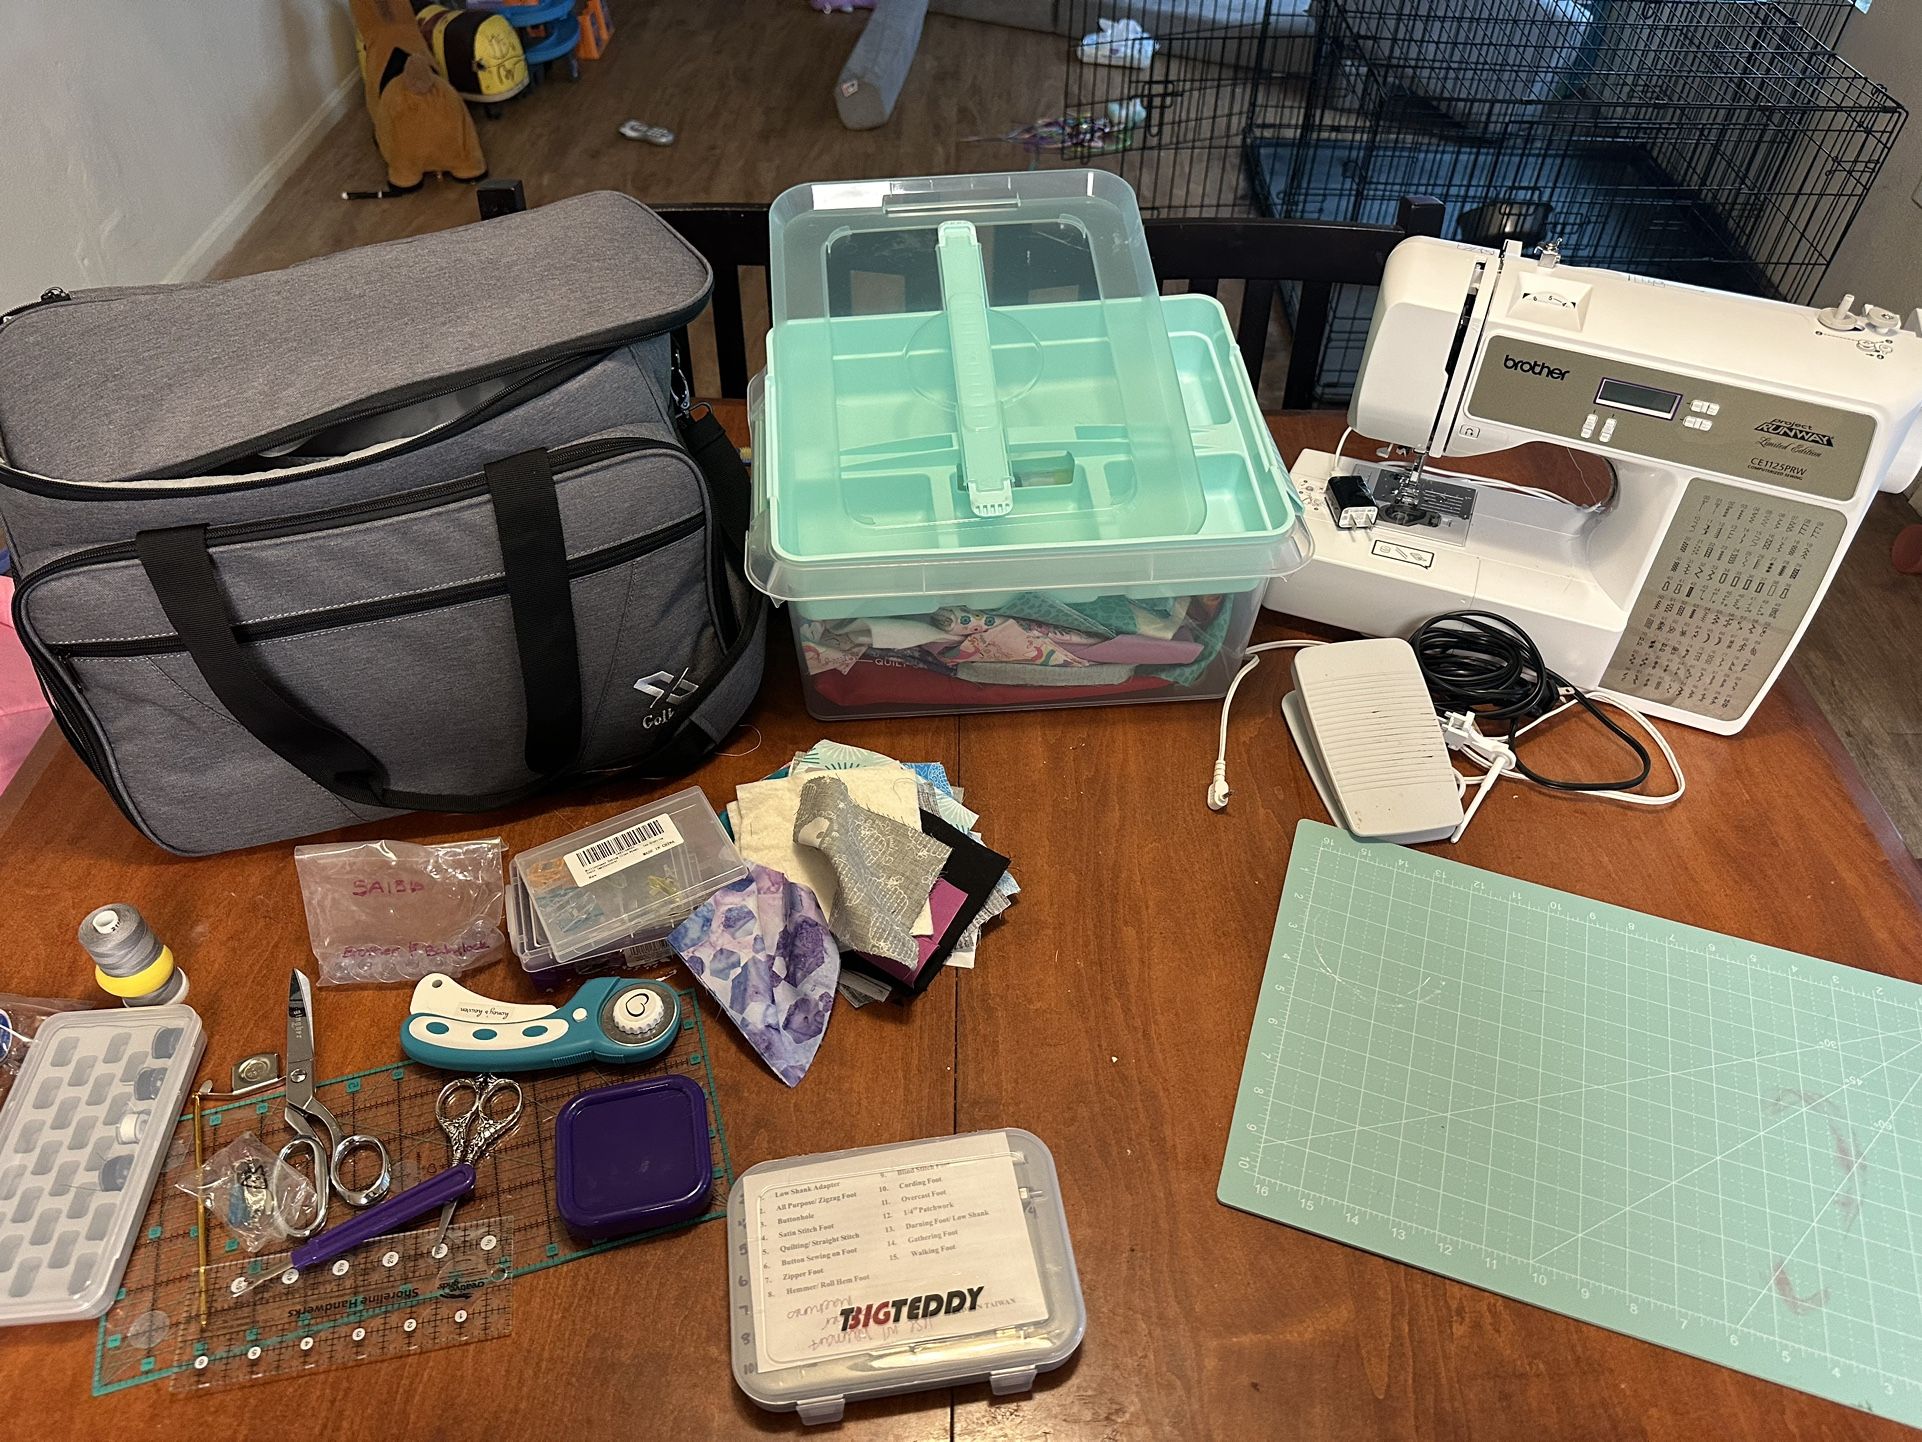 Sewing Machine, Bag & Accessories 